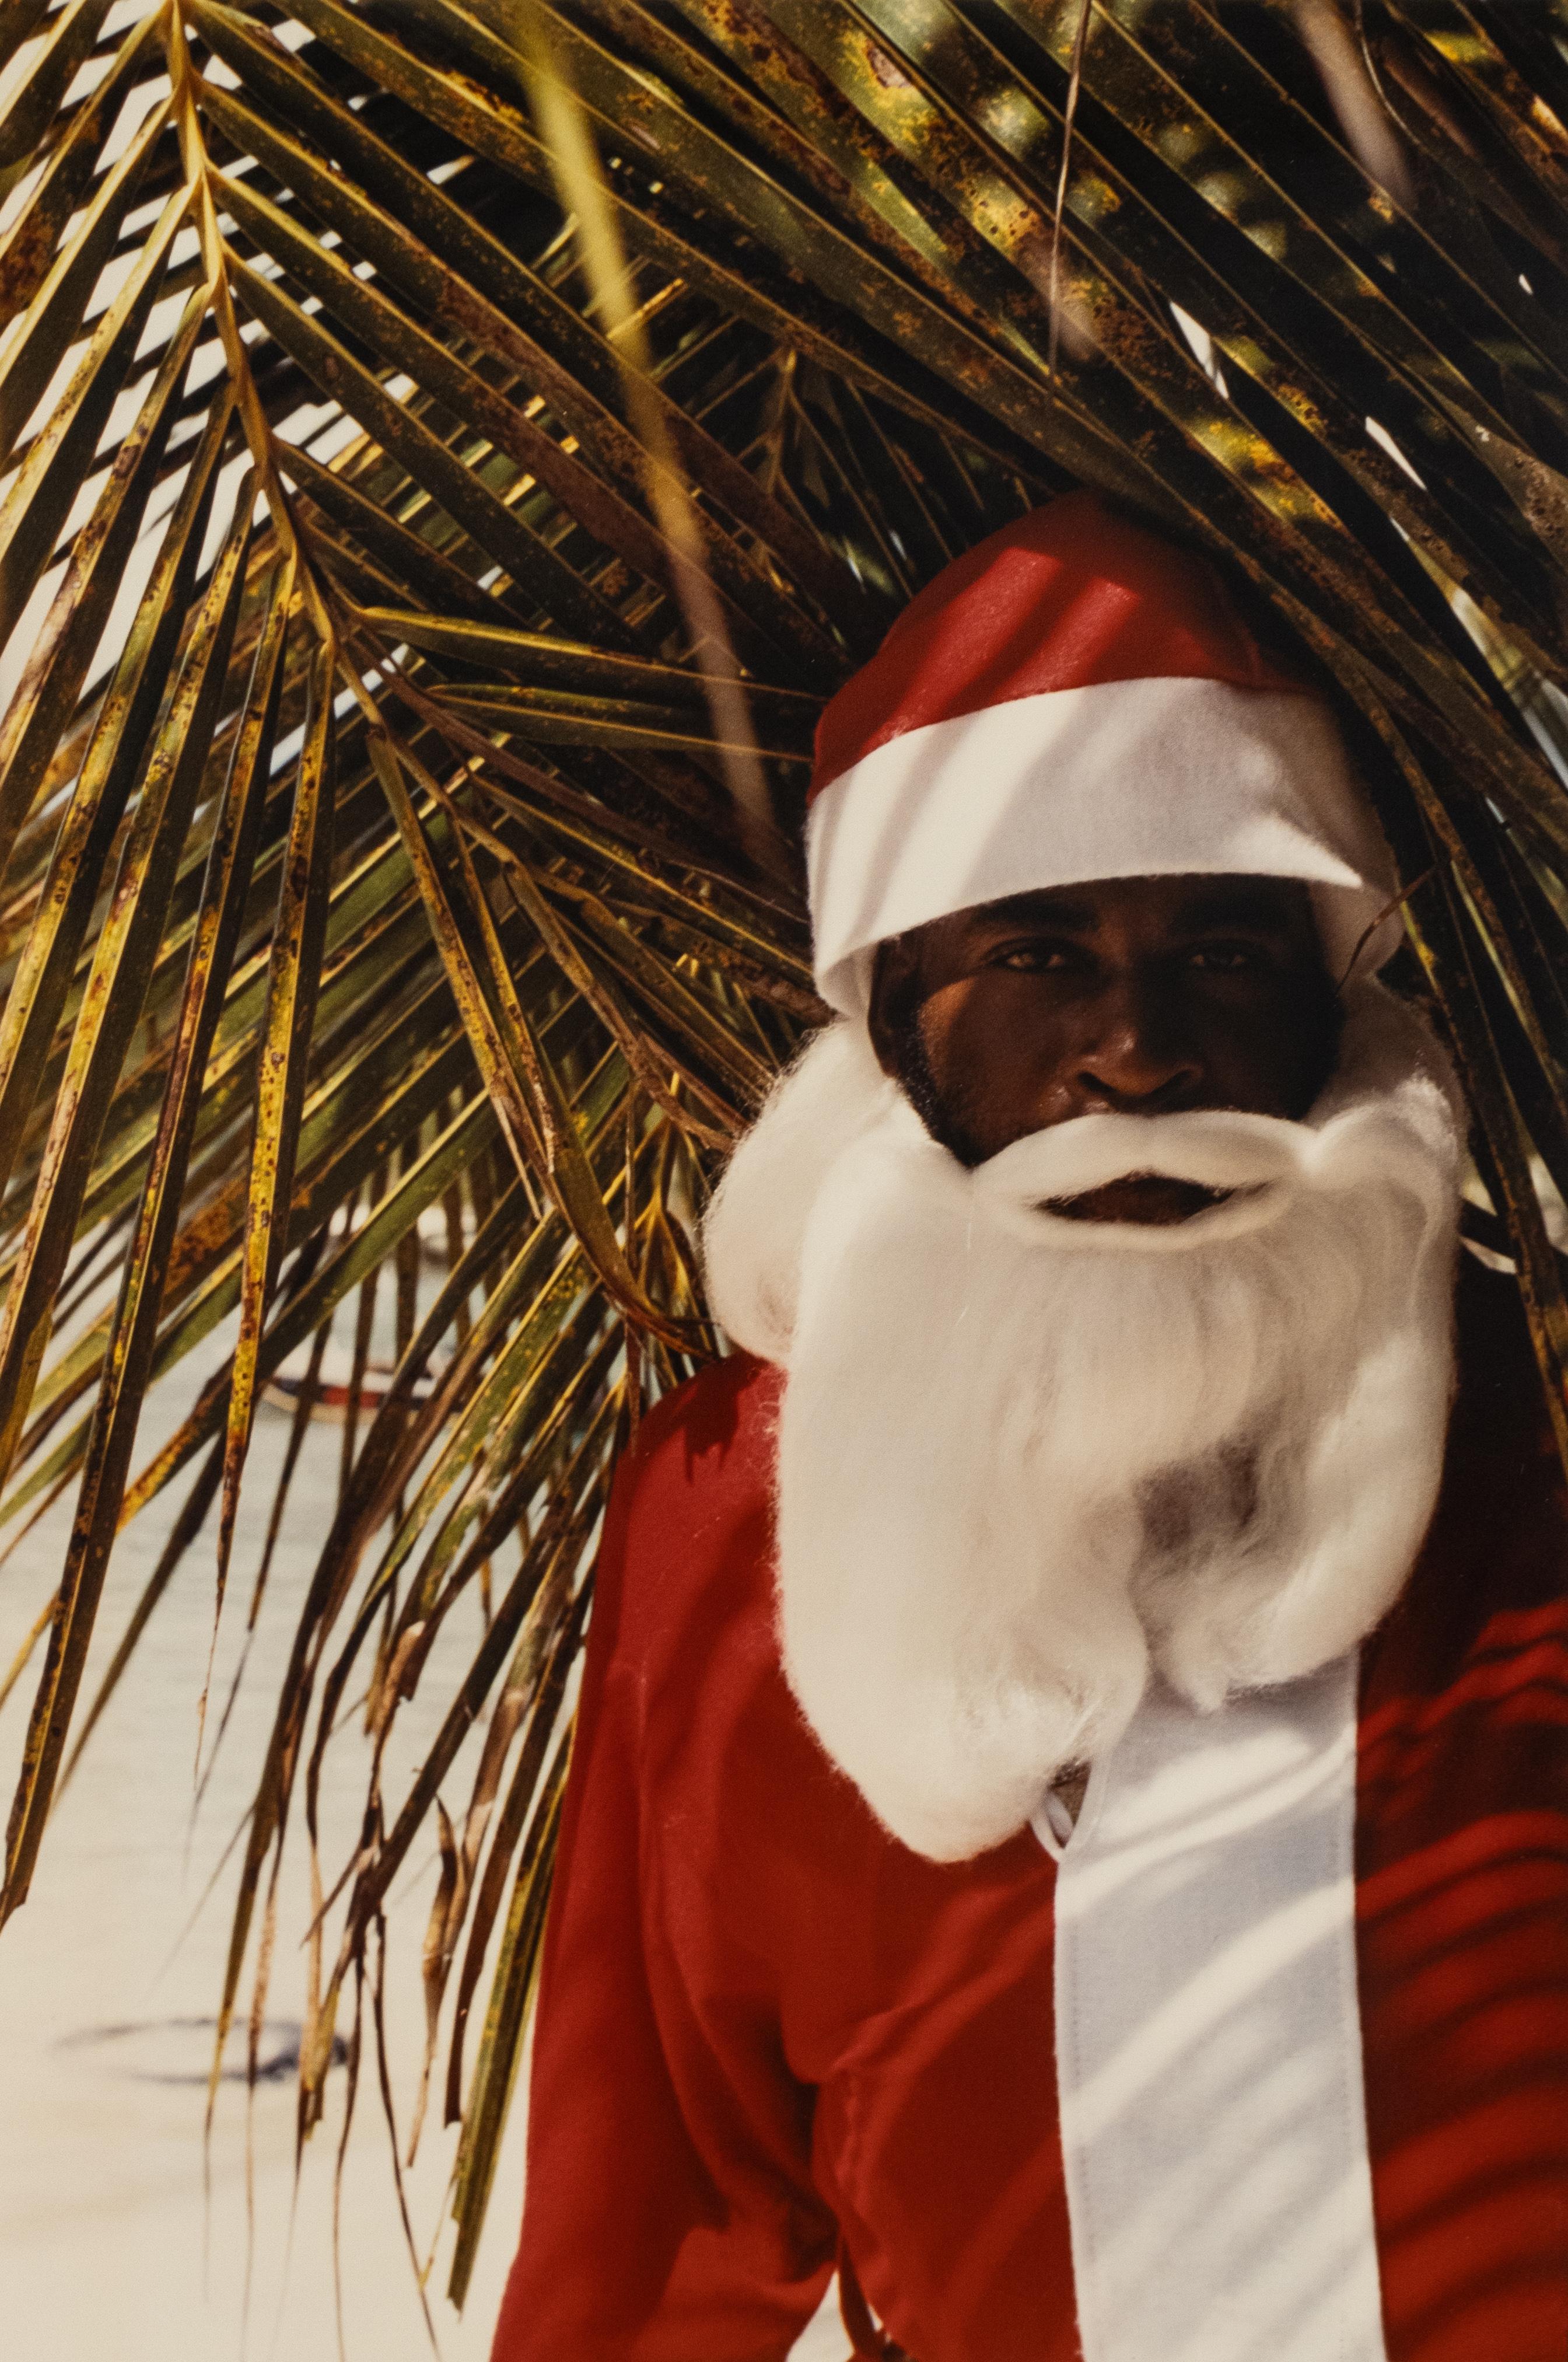 Ralph Gibson Portrait Photograph - Santa Claus, St. Martin